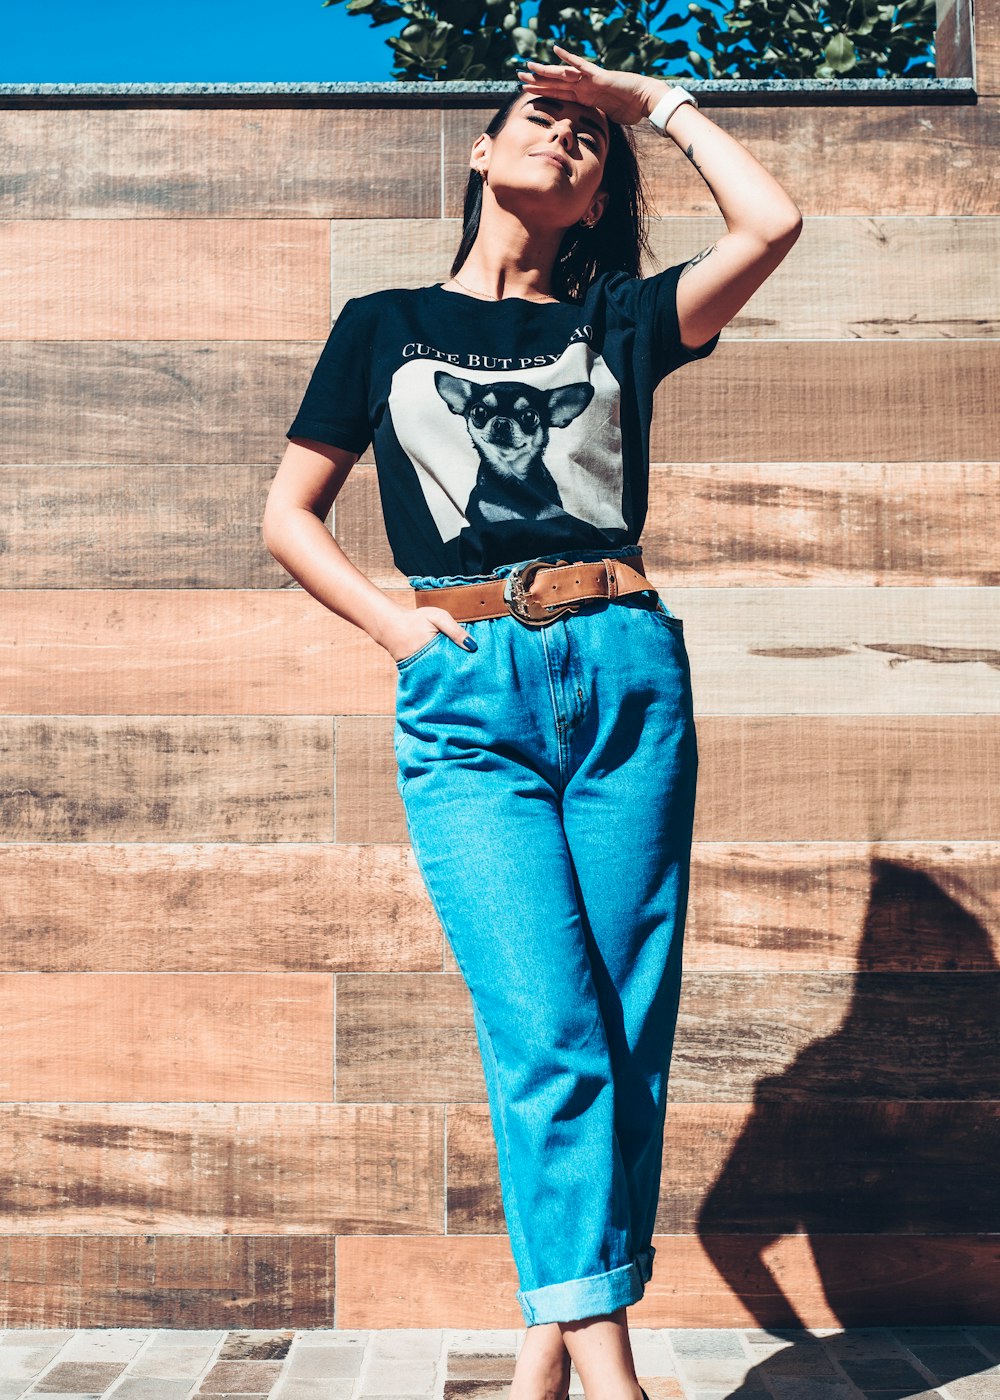 ordningen indendørs Habitat woman in black and white t-shirt and blue denim jeans standing on brown  wooden floor photo – Free Clothing Image on Unsplash